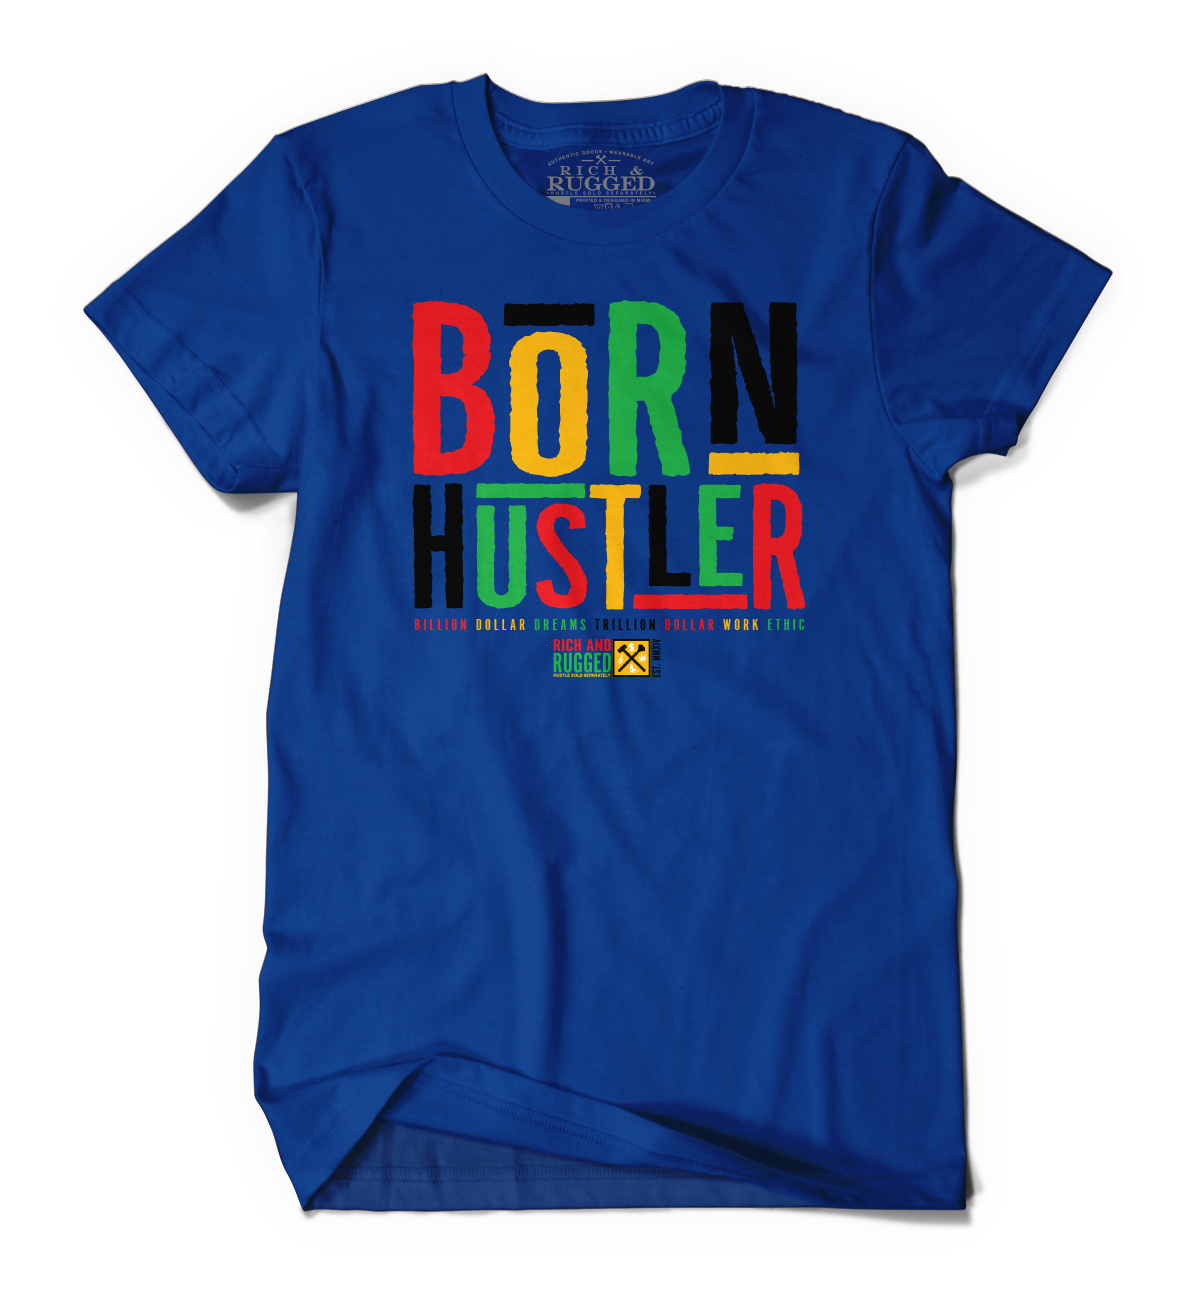 BORN HUSTLER - ROYAL BLUE